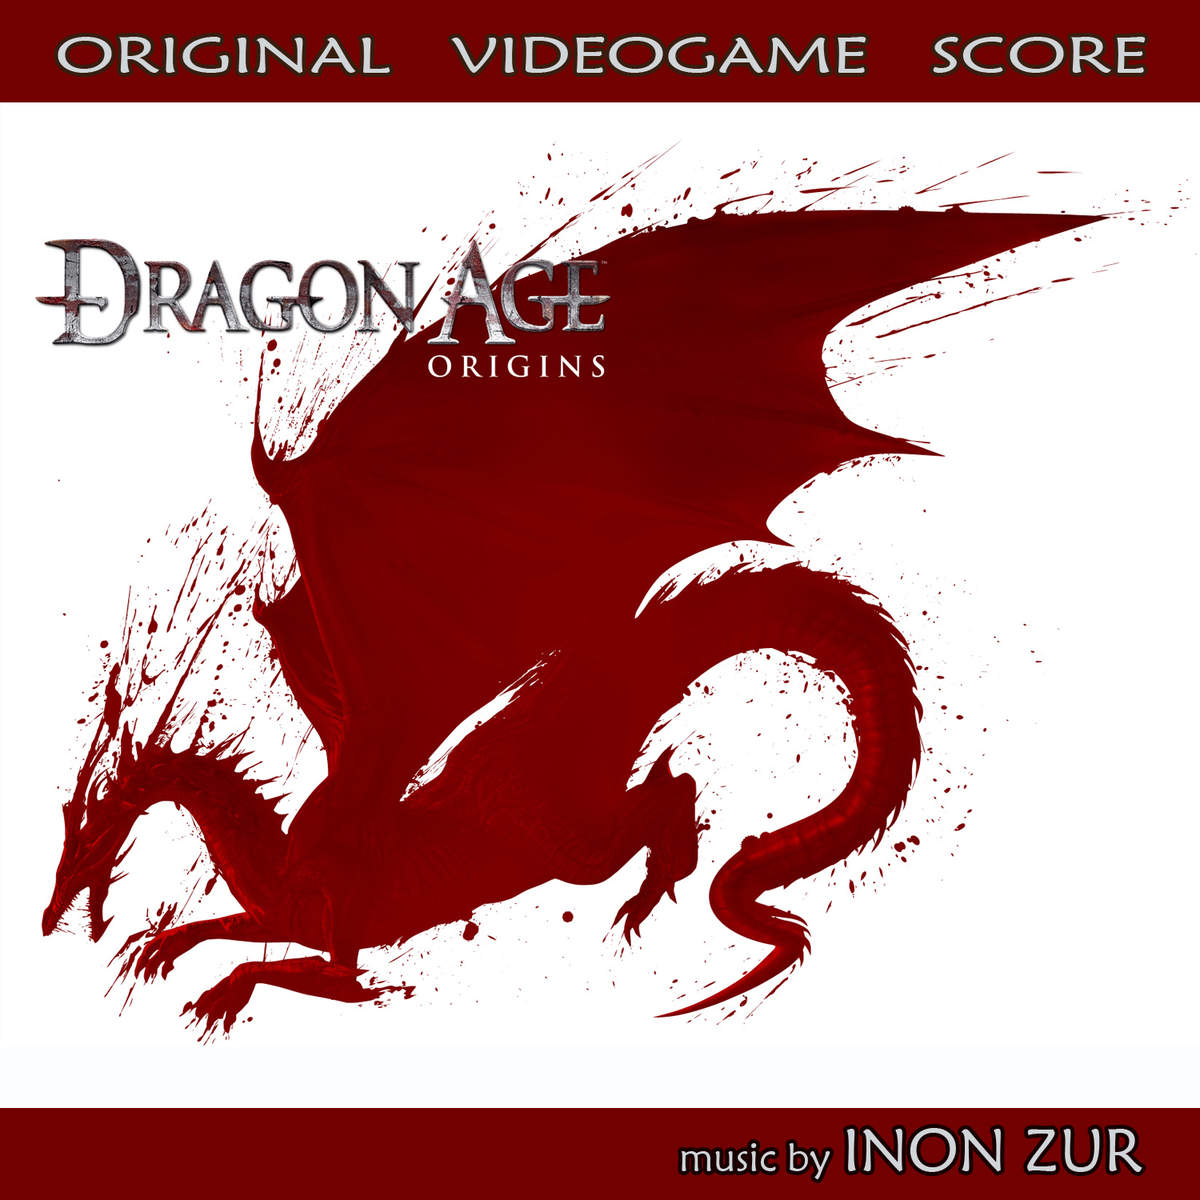 Dragon_Age_Origins_Original_Videogame_Score__cover1200x1200.jpg